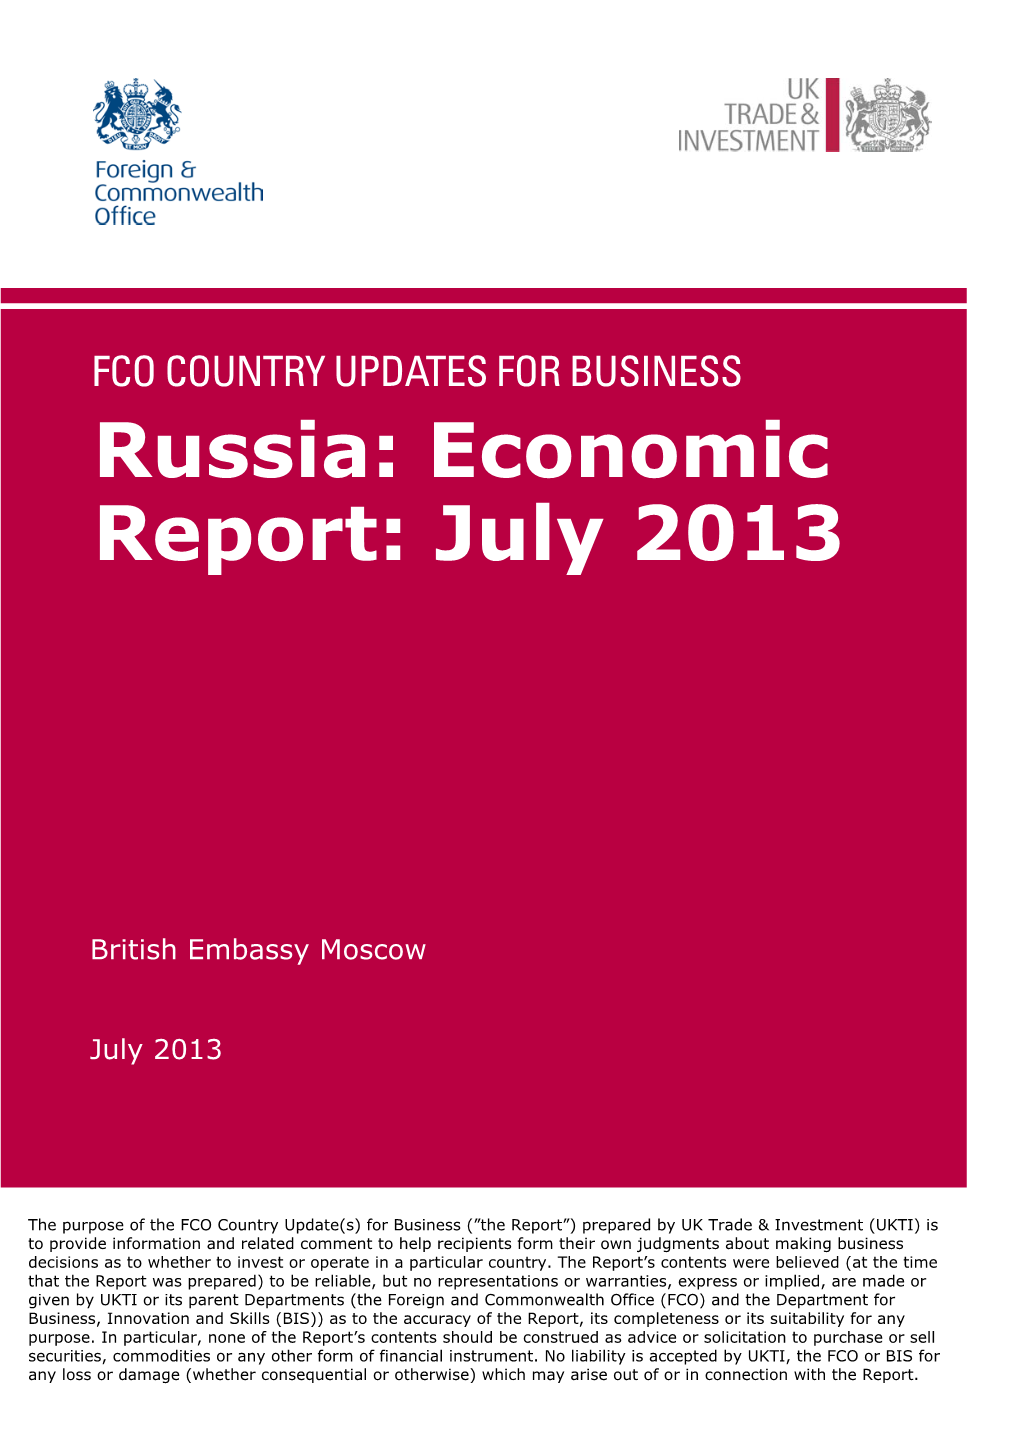 Russia: Economic Report: July 2013